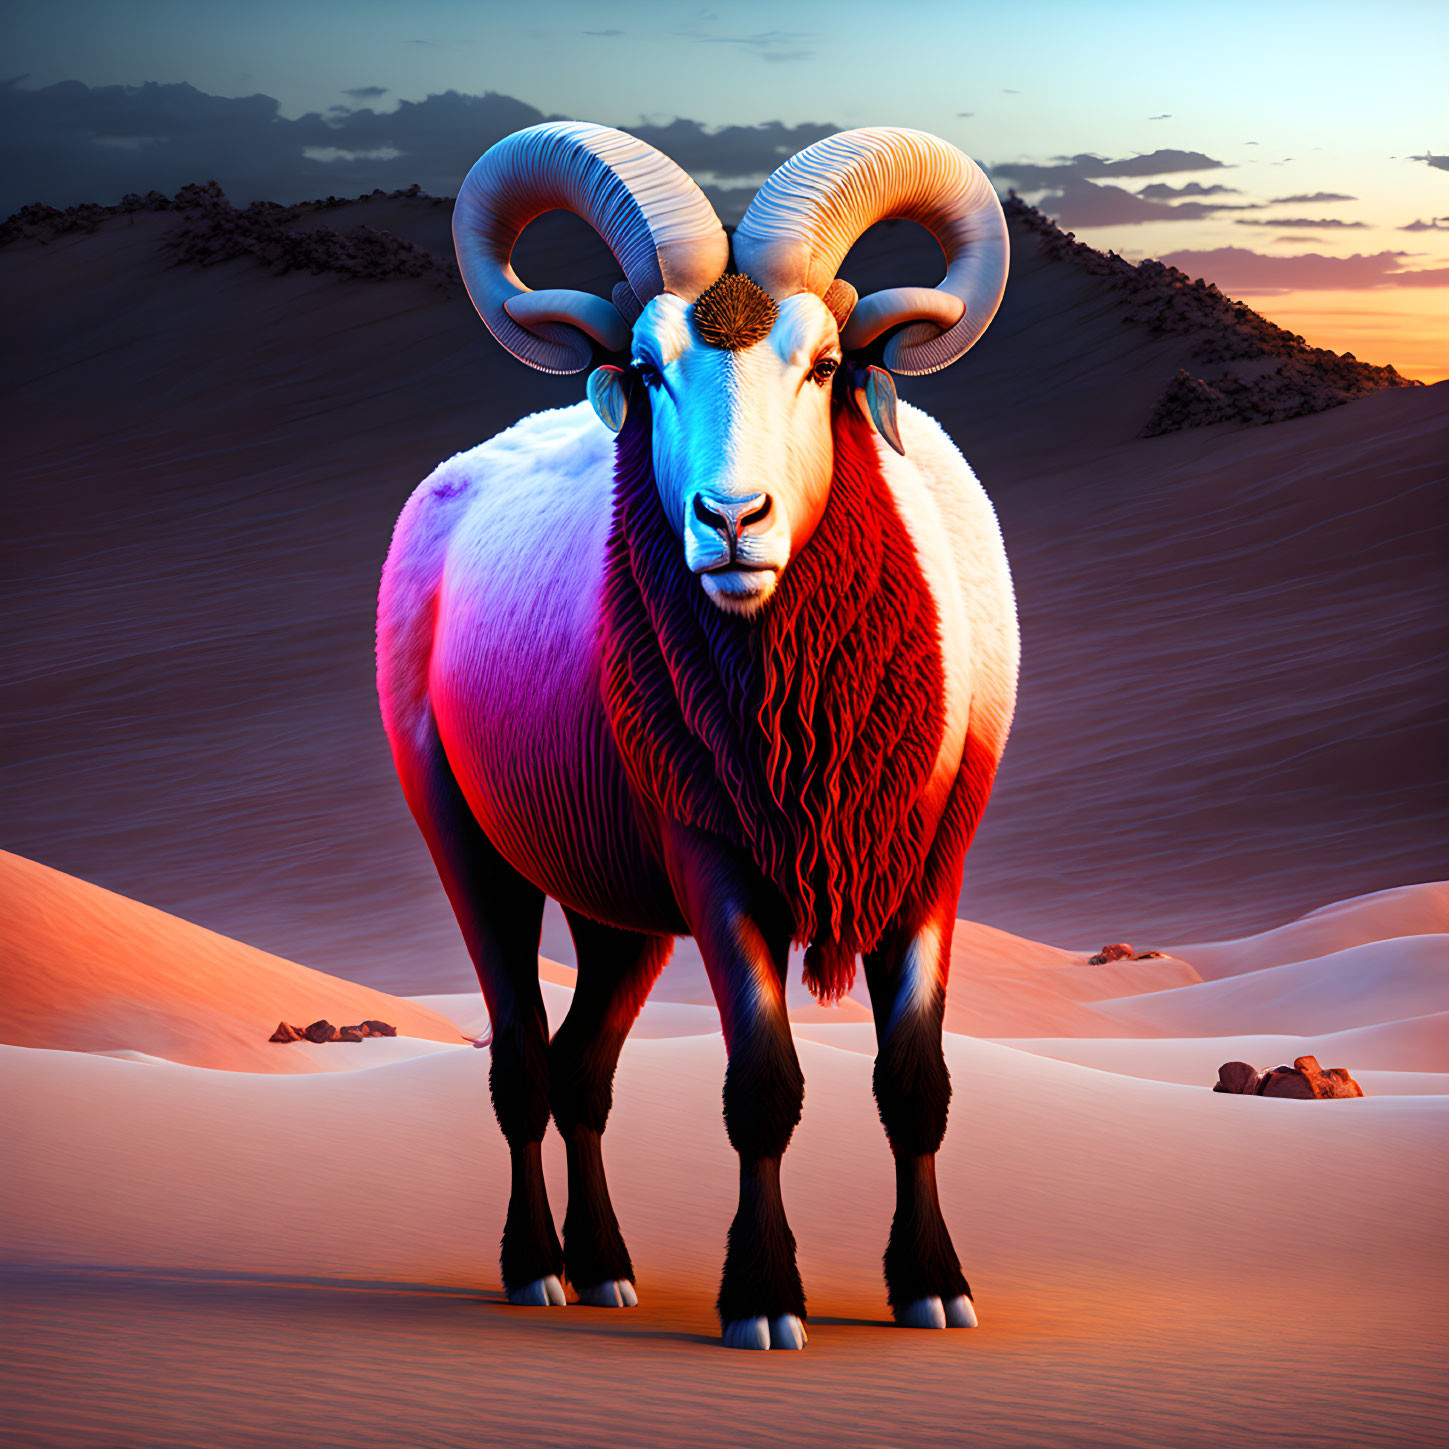 A ram in the desert